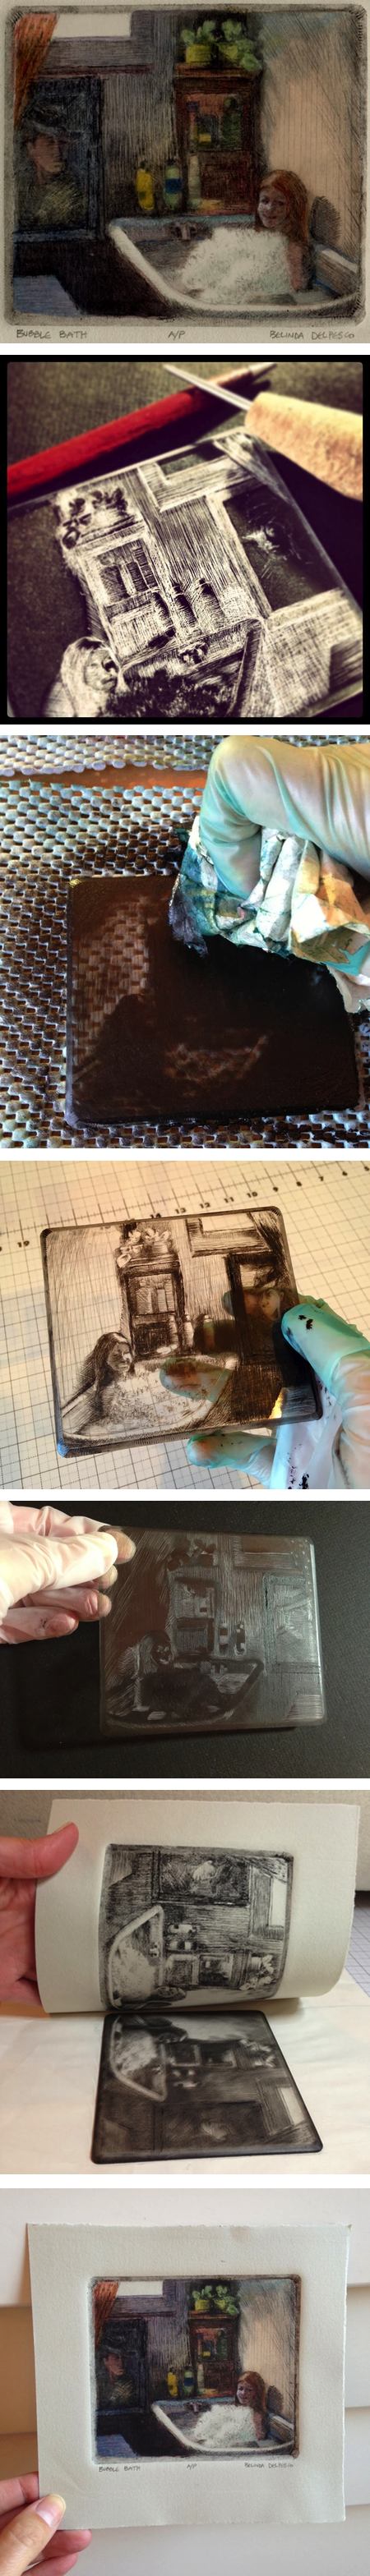 Belinda Del Pesco drypoint engravings on acrylic sheets